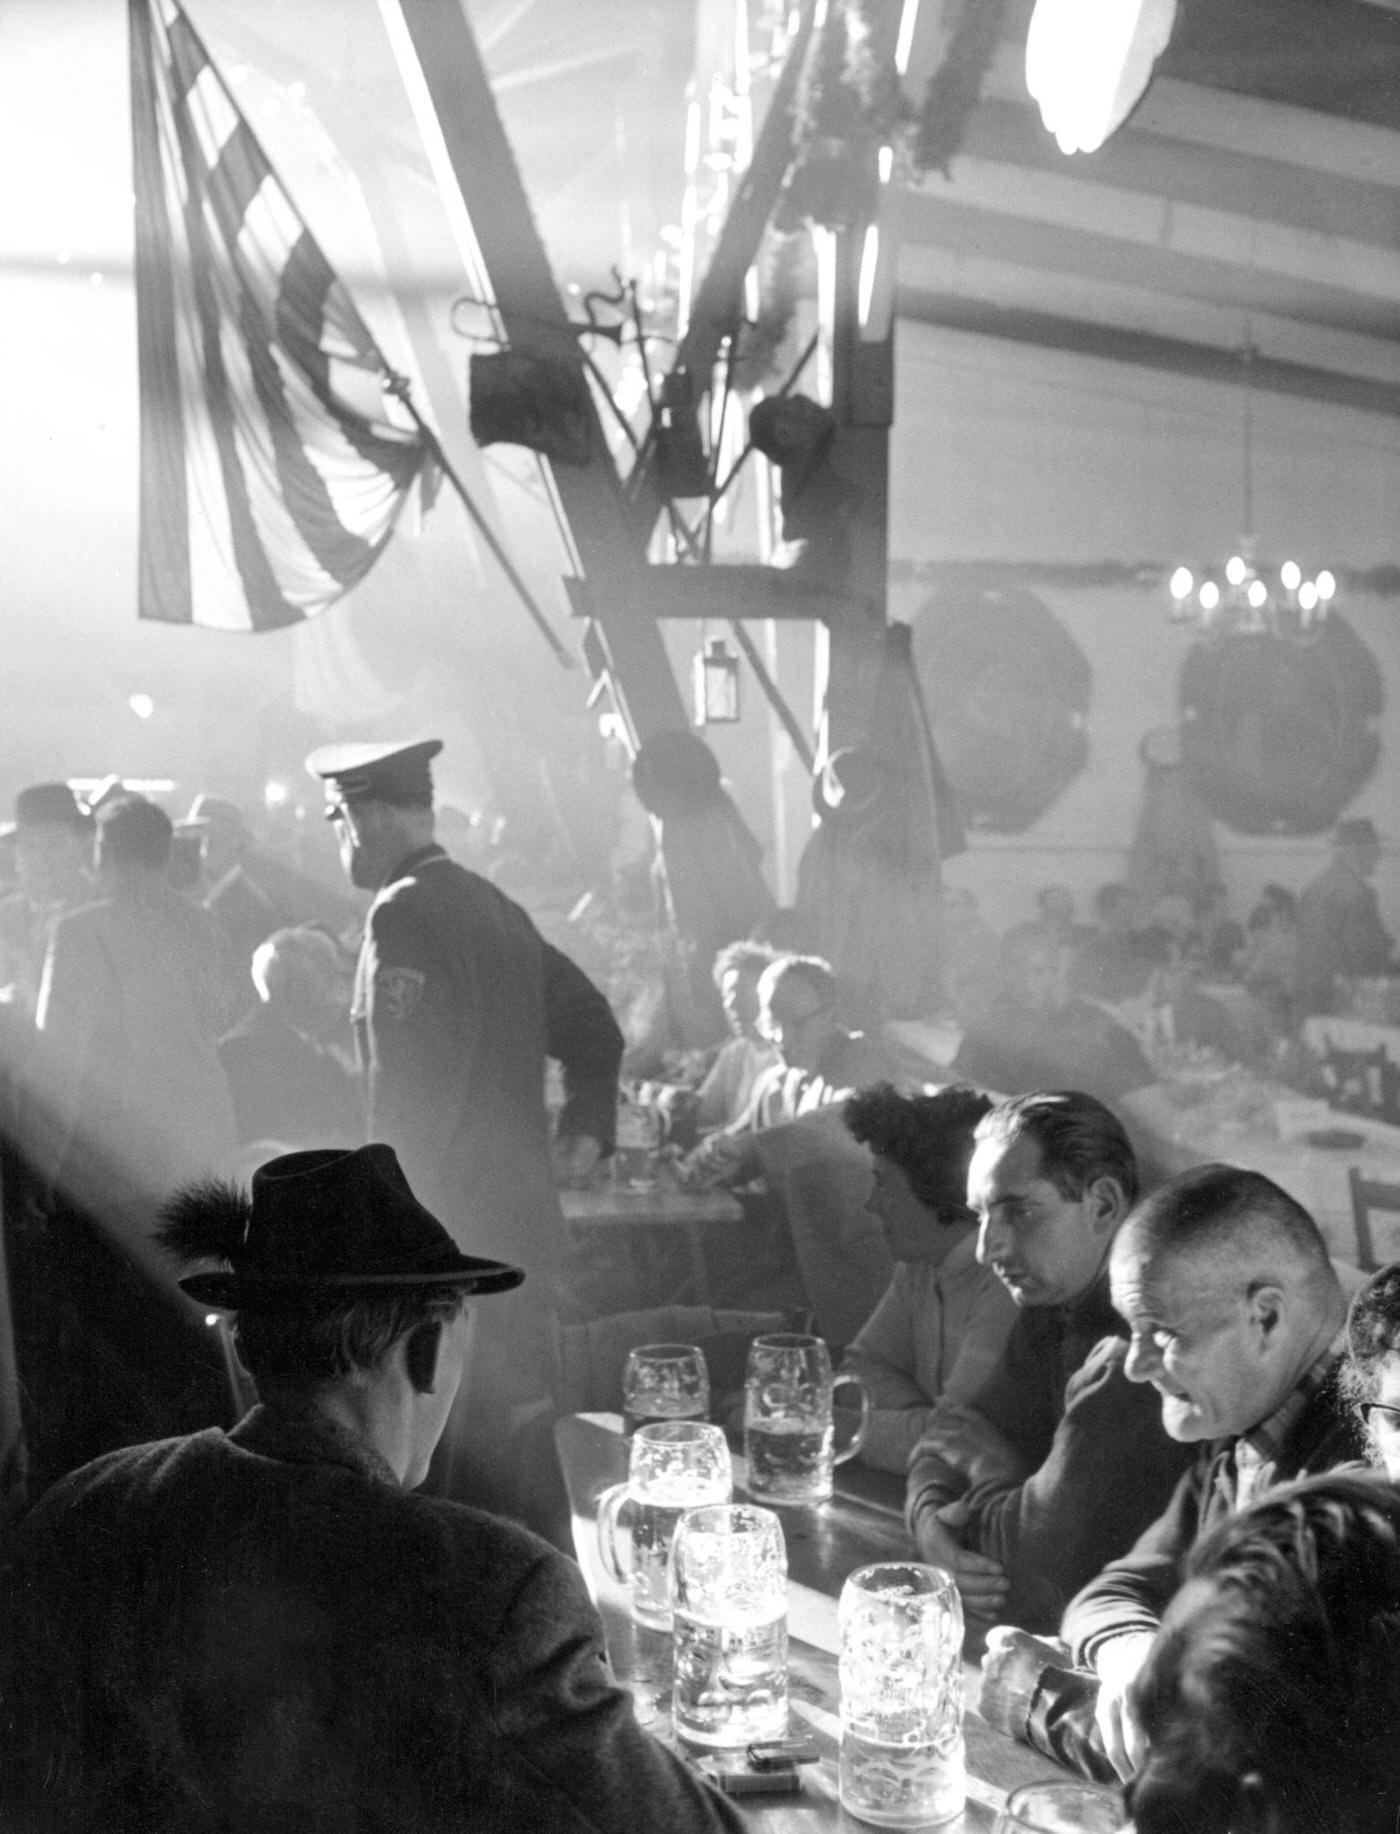 Atmosphere of Oktoberfest with beer and food, 1961.